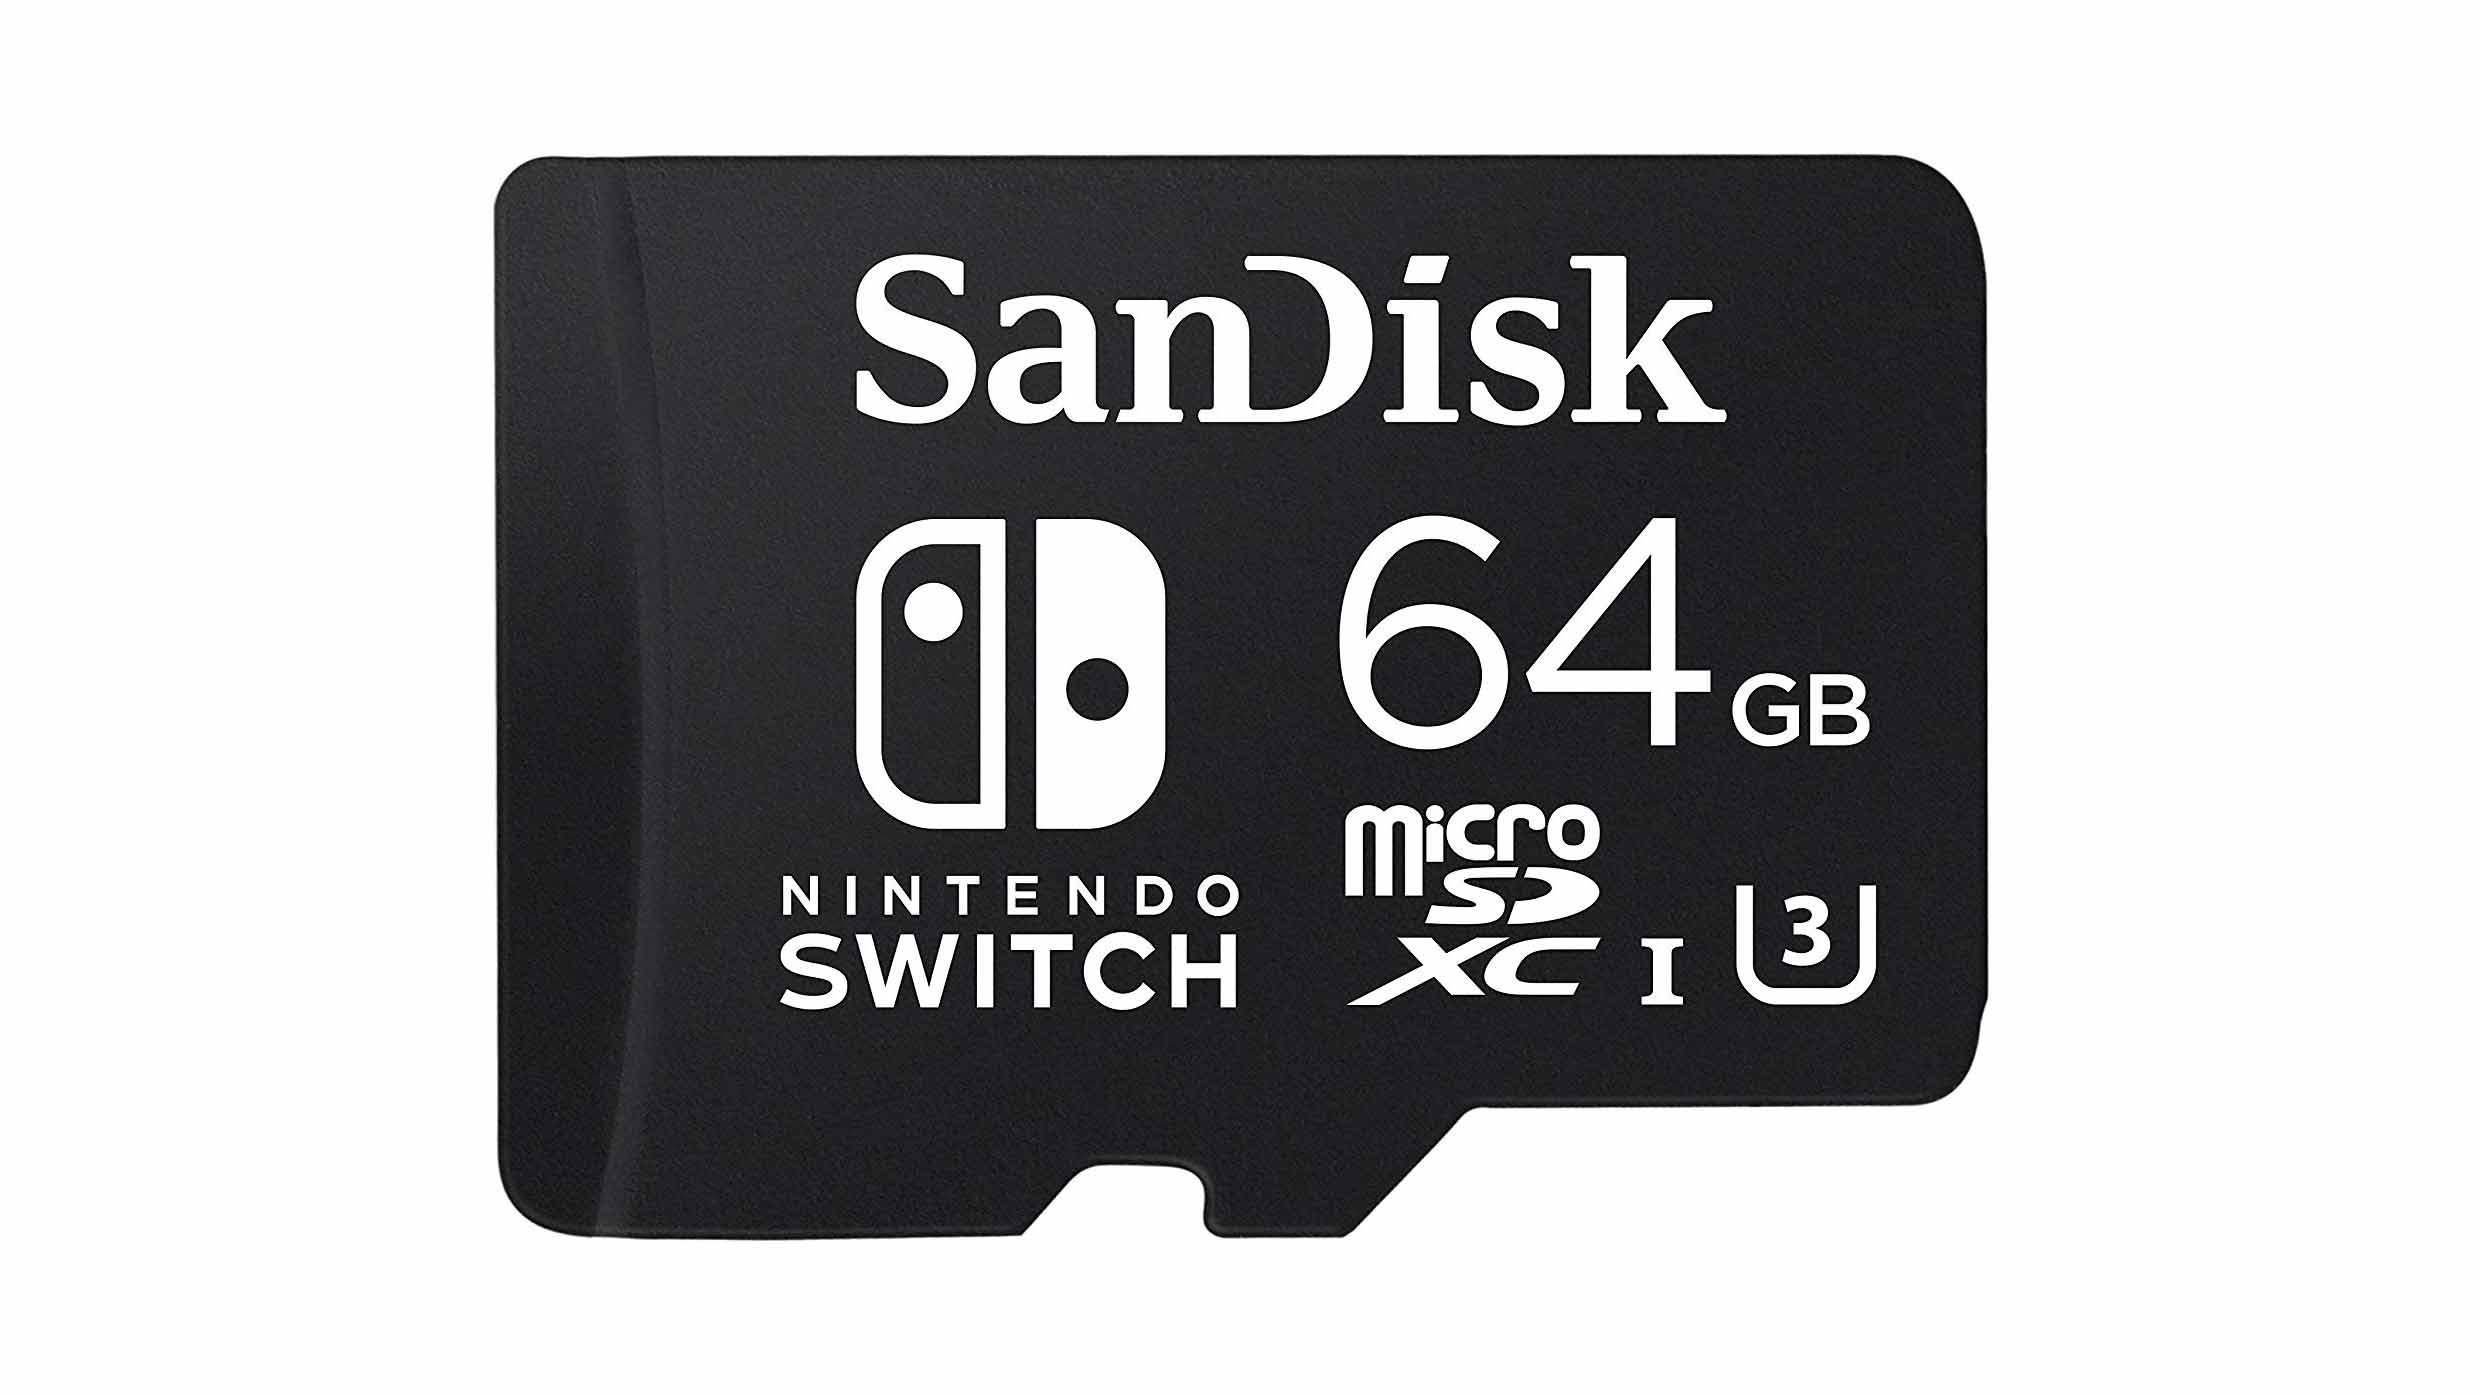 Sandisk microSDXC official Nintendo Switch memory card